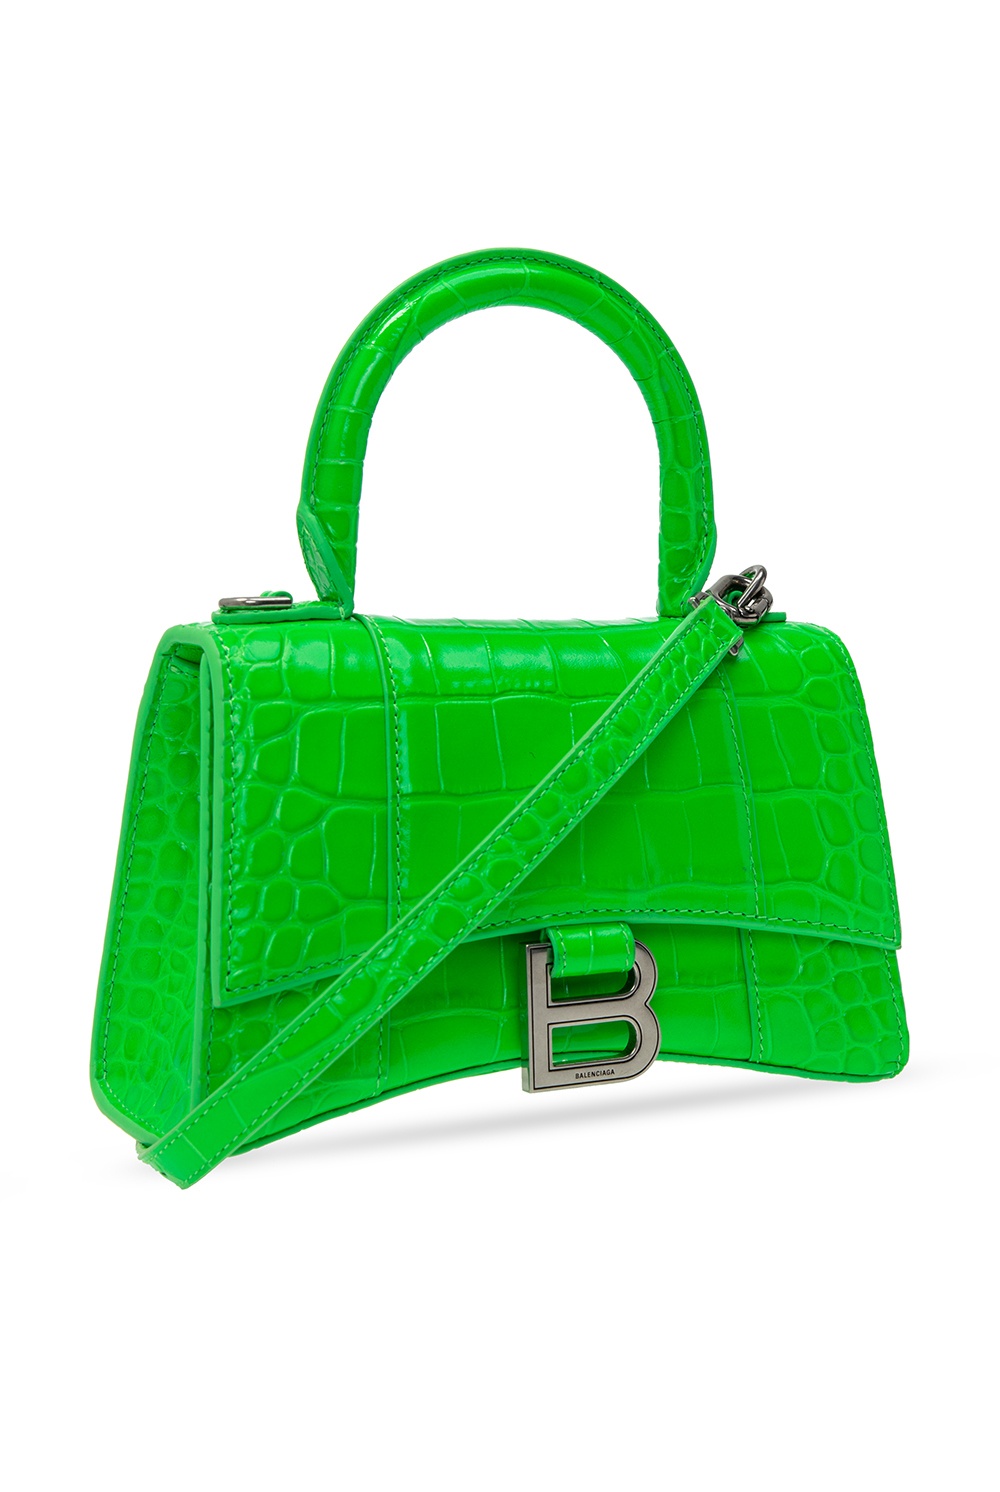 Designer Bags Womens GG Hourglass Bag Crocodile Pattern Trendy